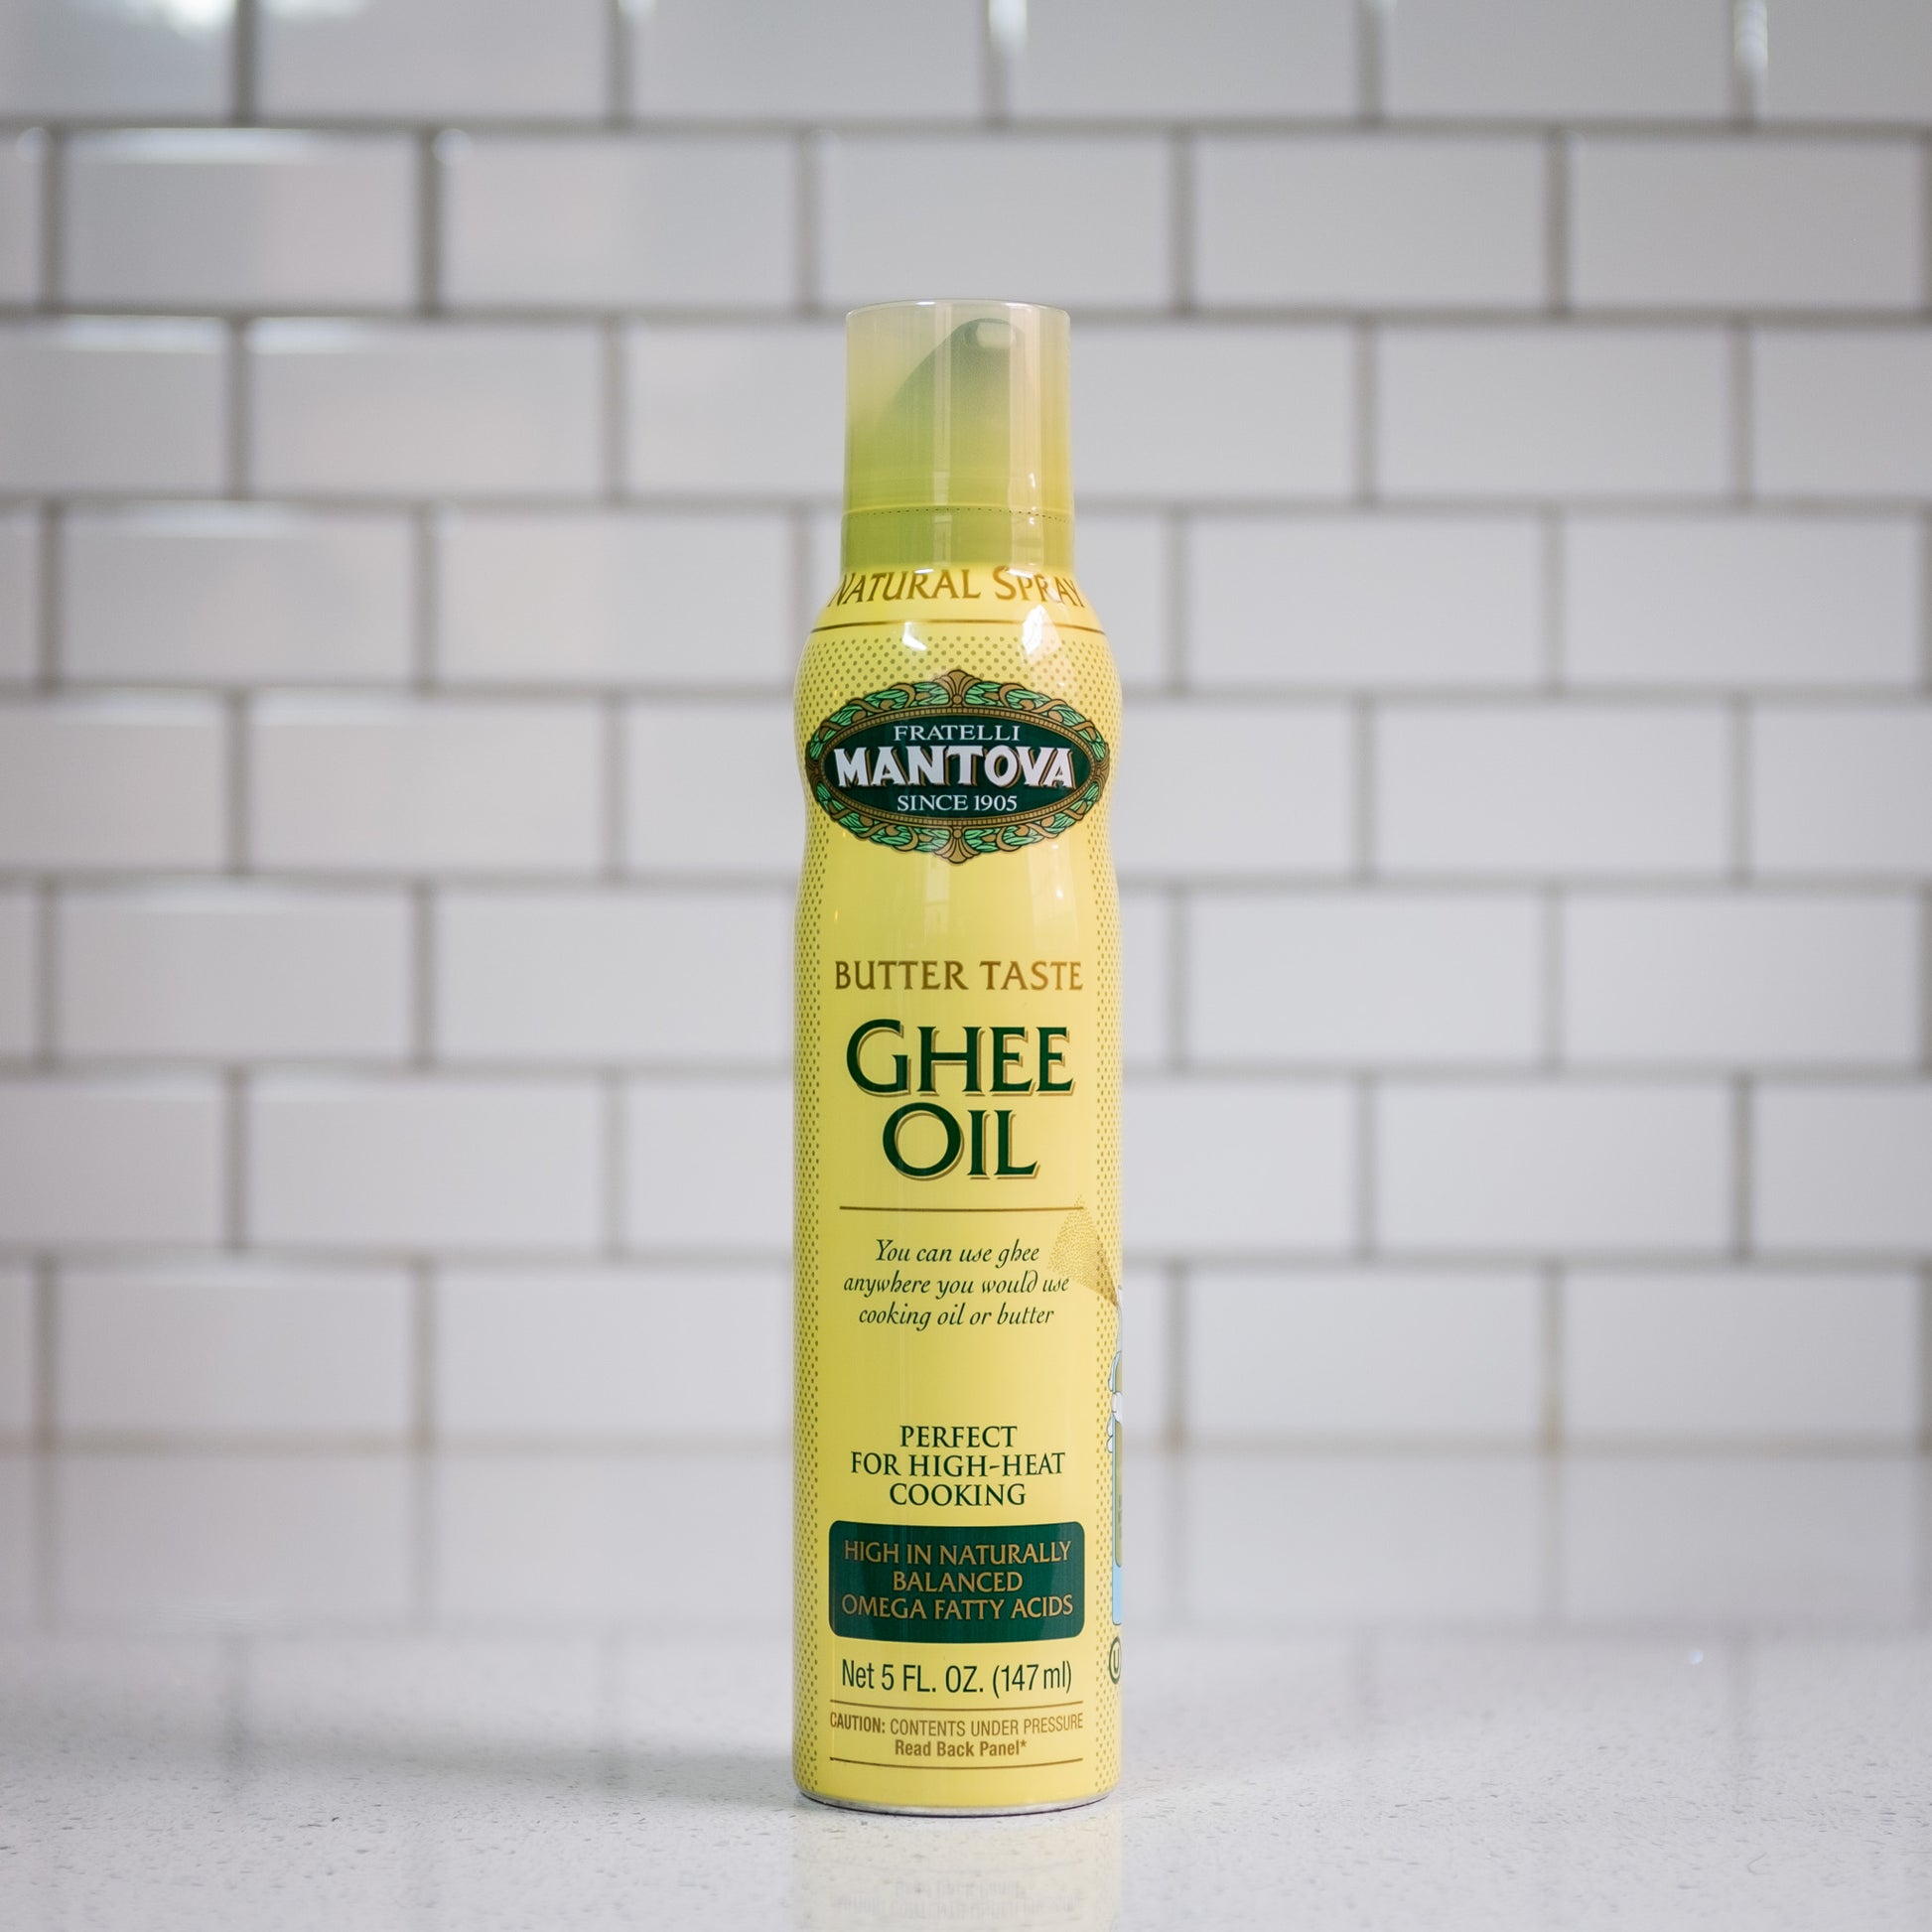 A spray bottle of ghee+olive oil.